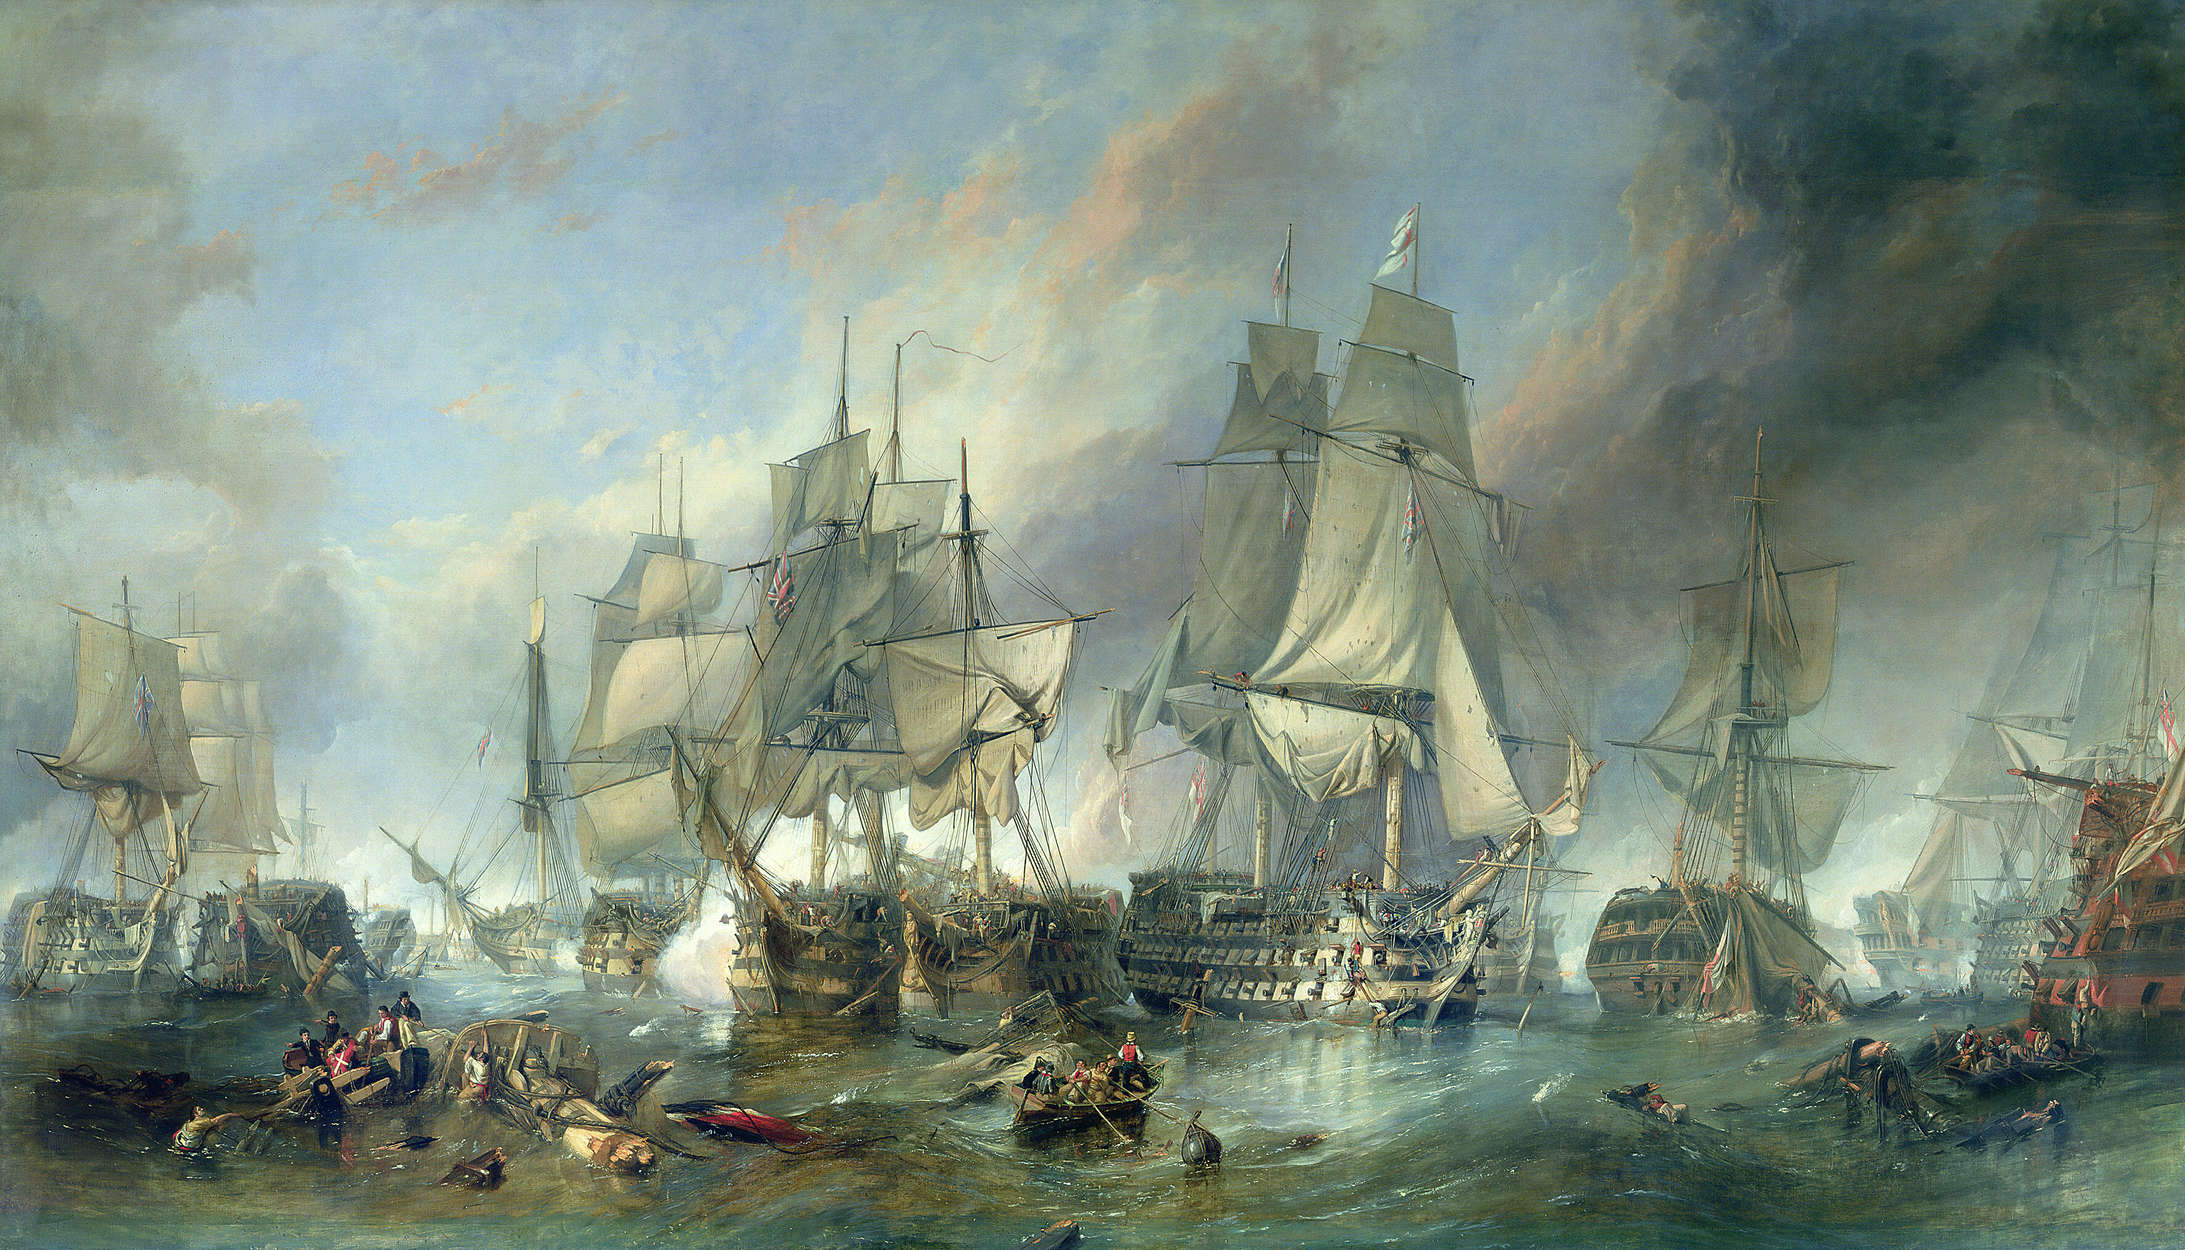             Mural "La batalla de Trafalgar" de Clarkson Stanfield
        